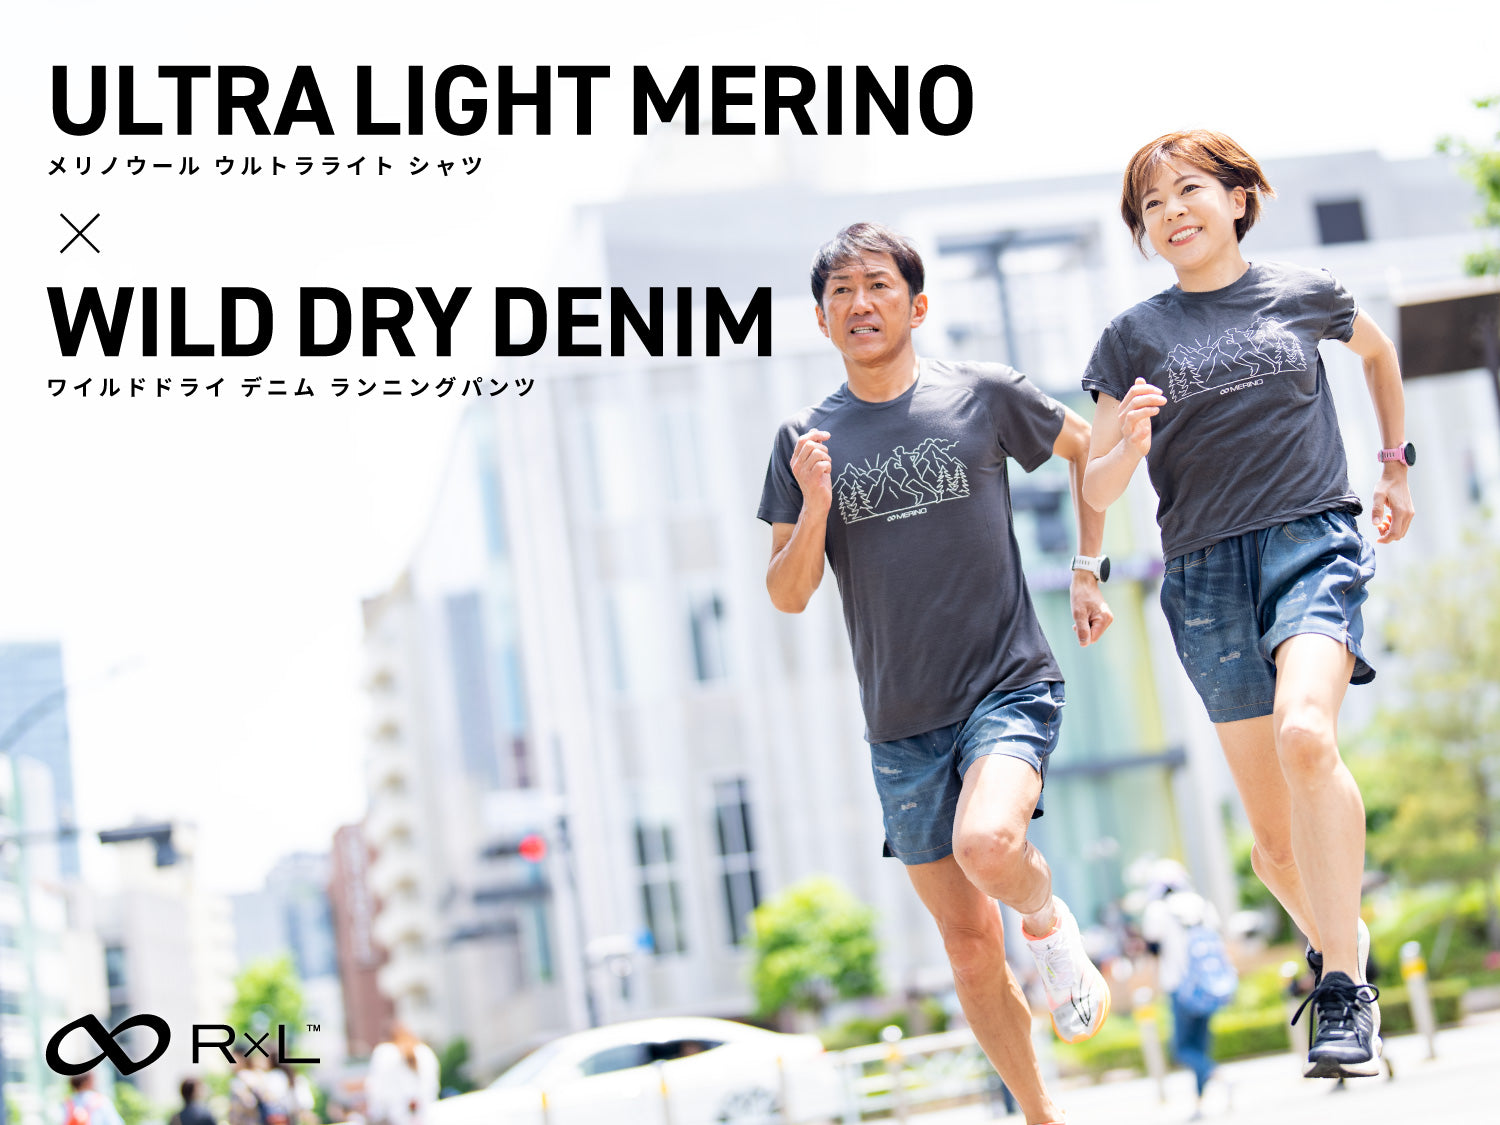 ULTRA LIGHT MERINO & WILD DRY DENIM